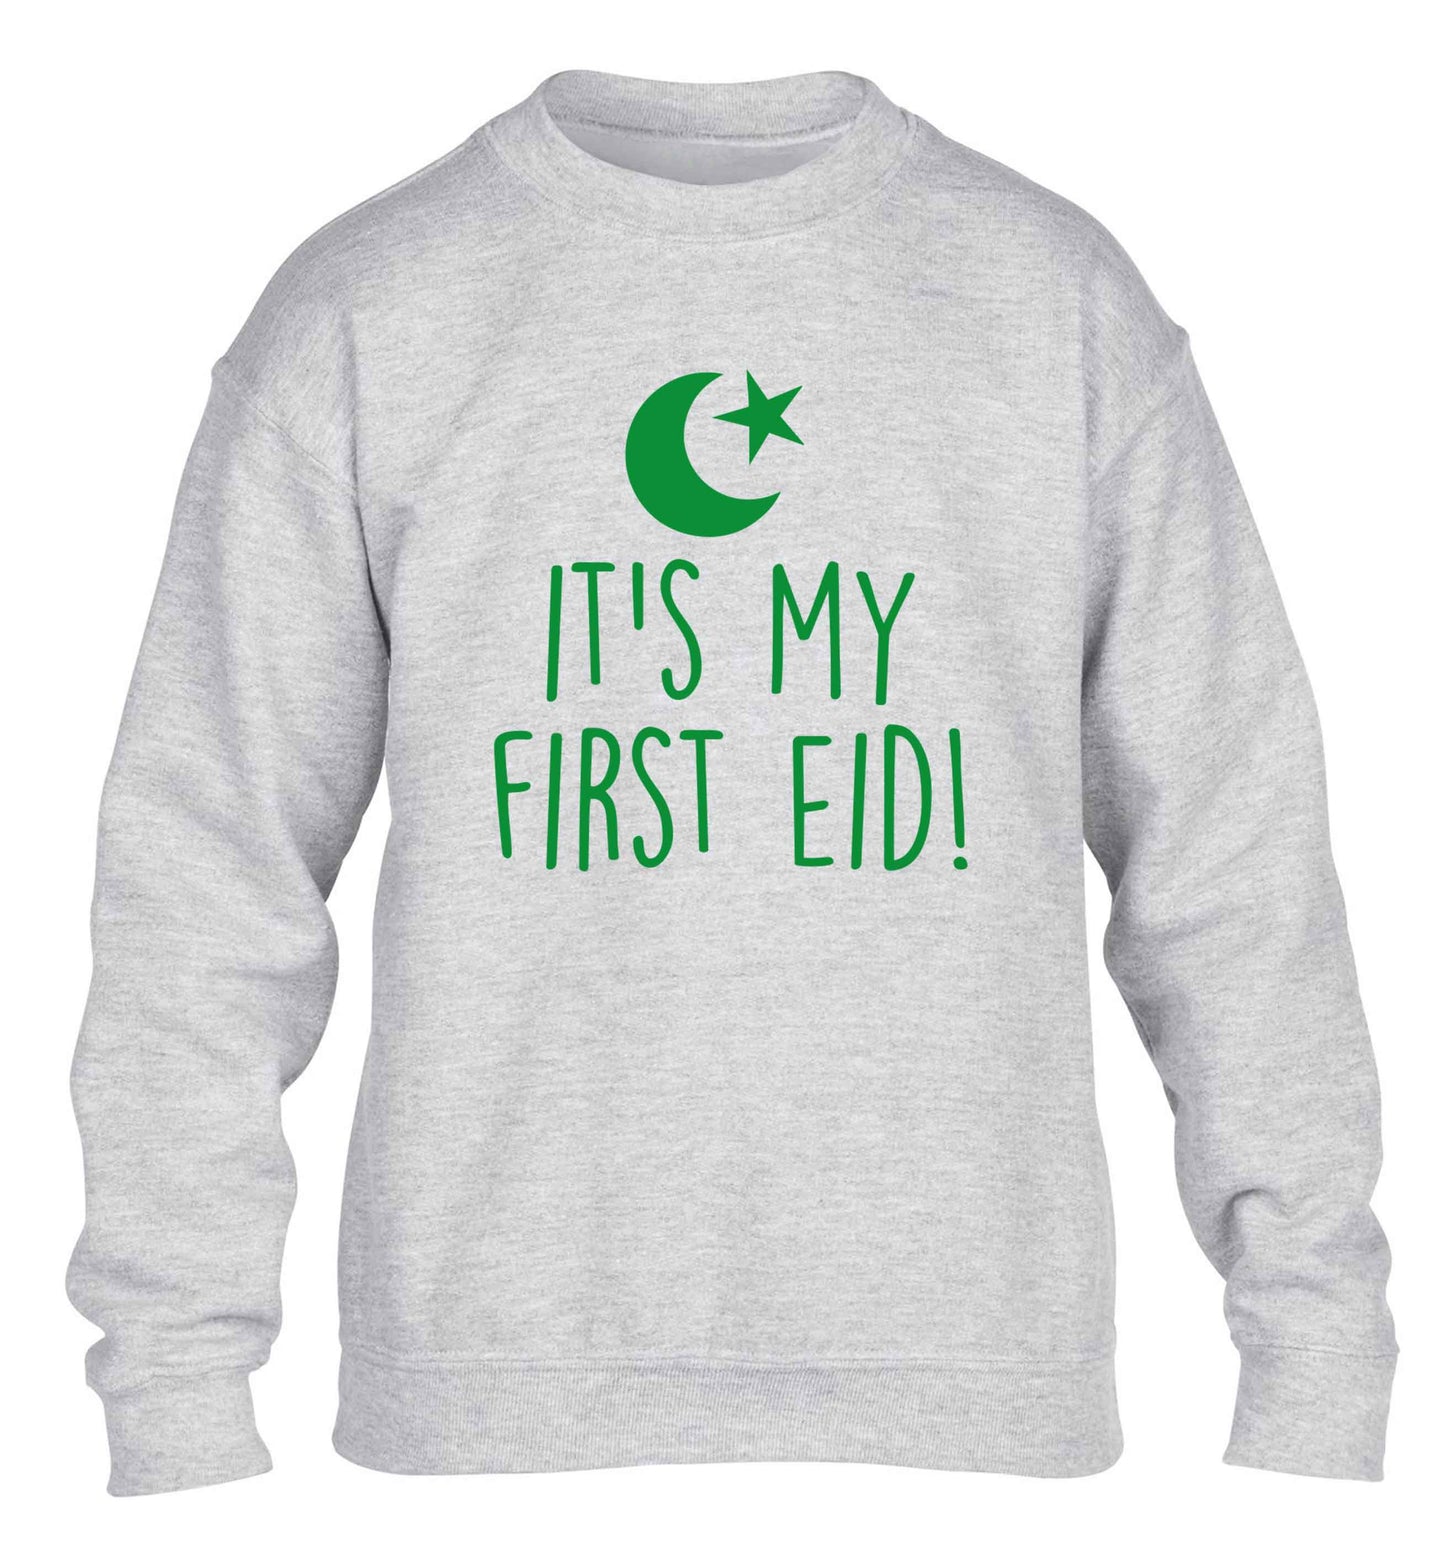 It's my first Eid children's grey sweater 12-13 Years